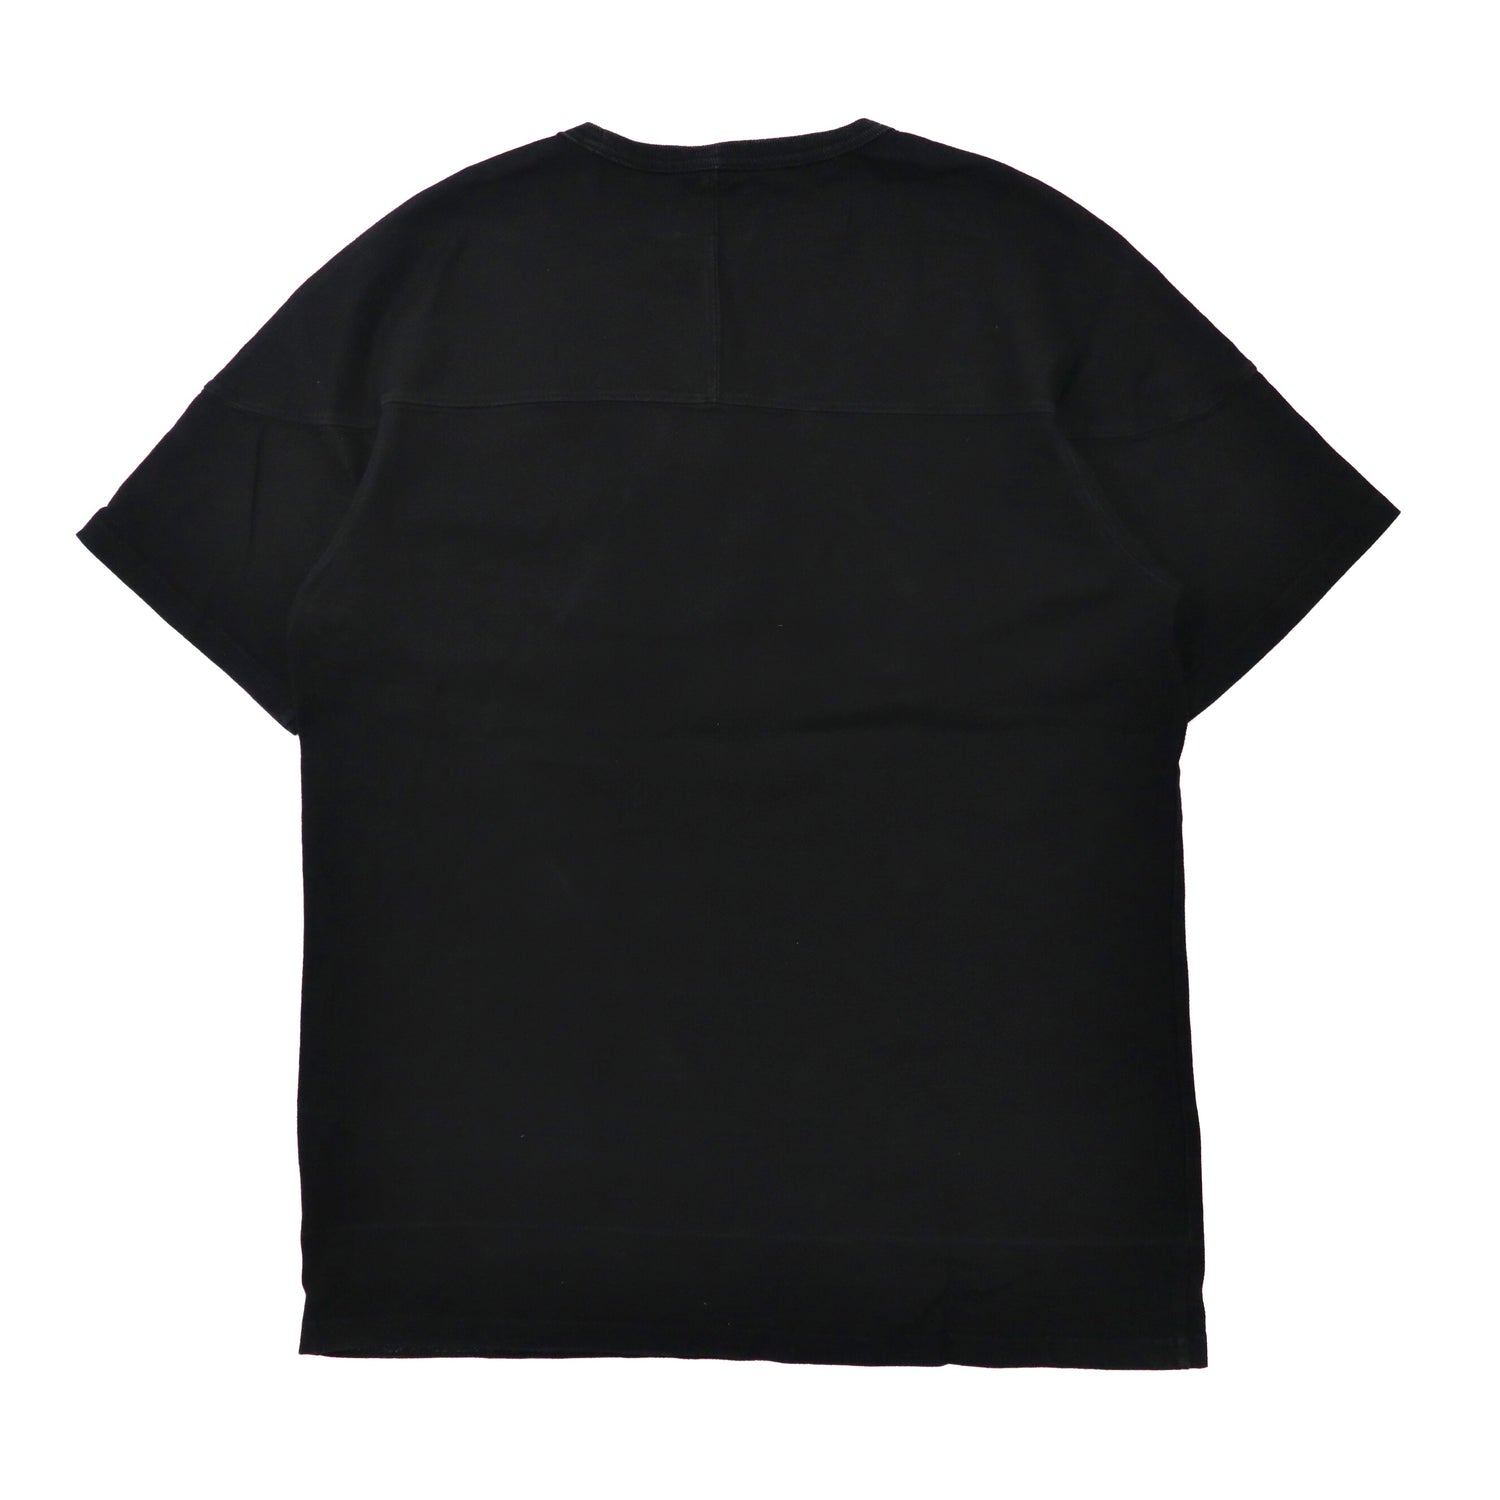 Stussy Big Size Logo Tee T-Shirt XL Black Cotton Heavy Weight ...